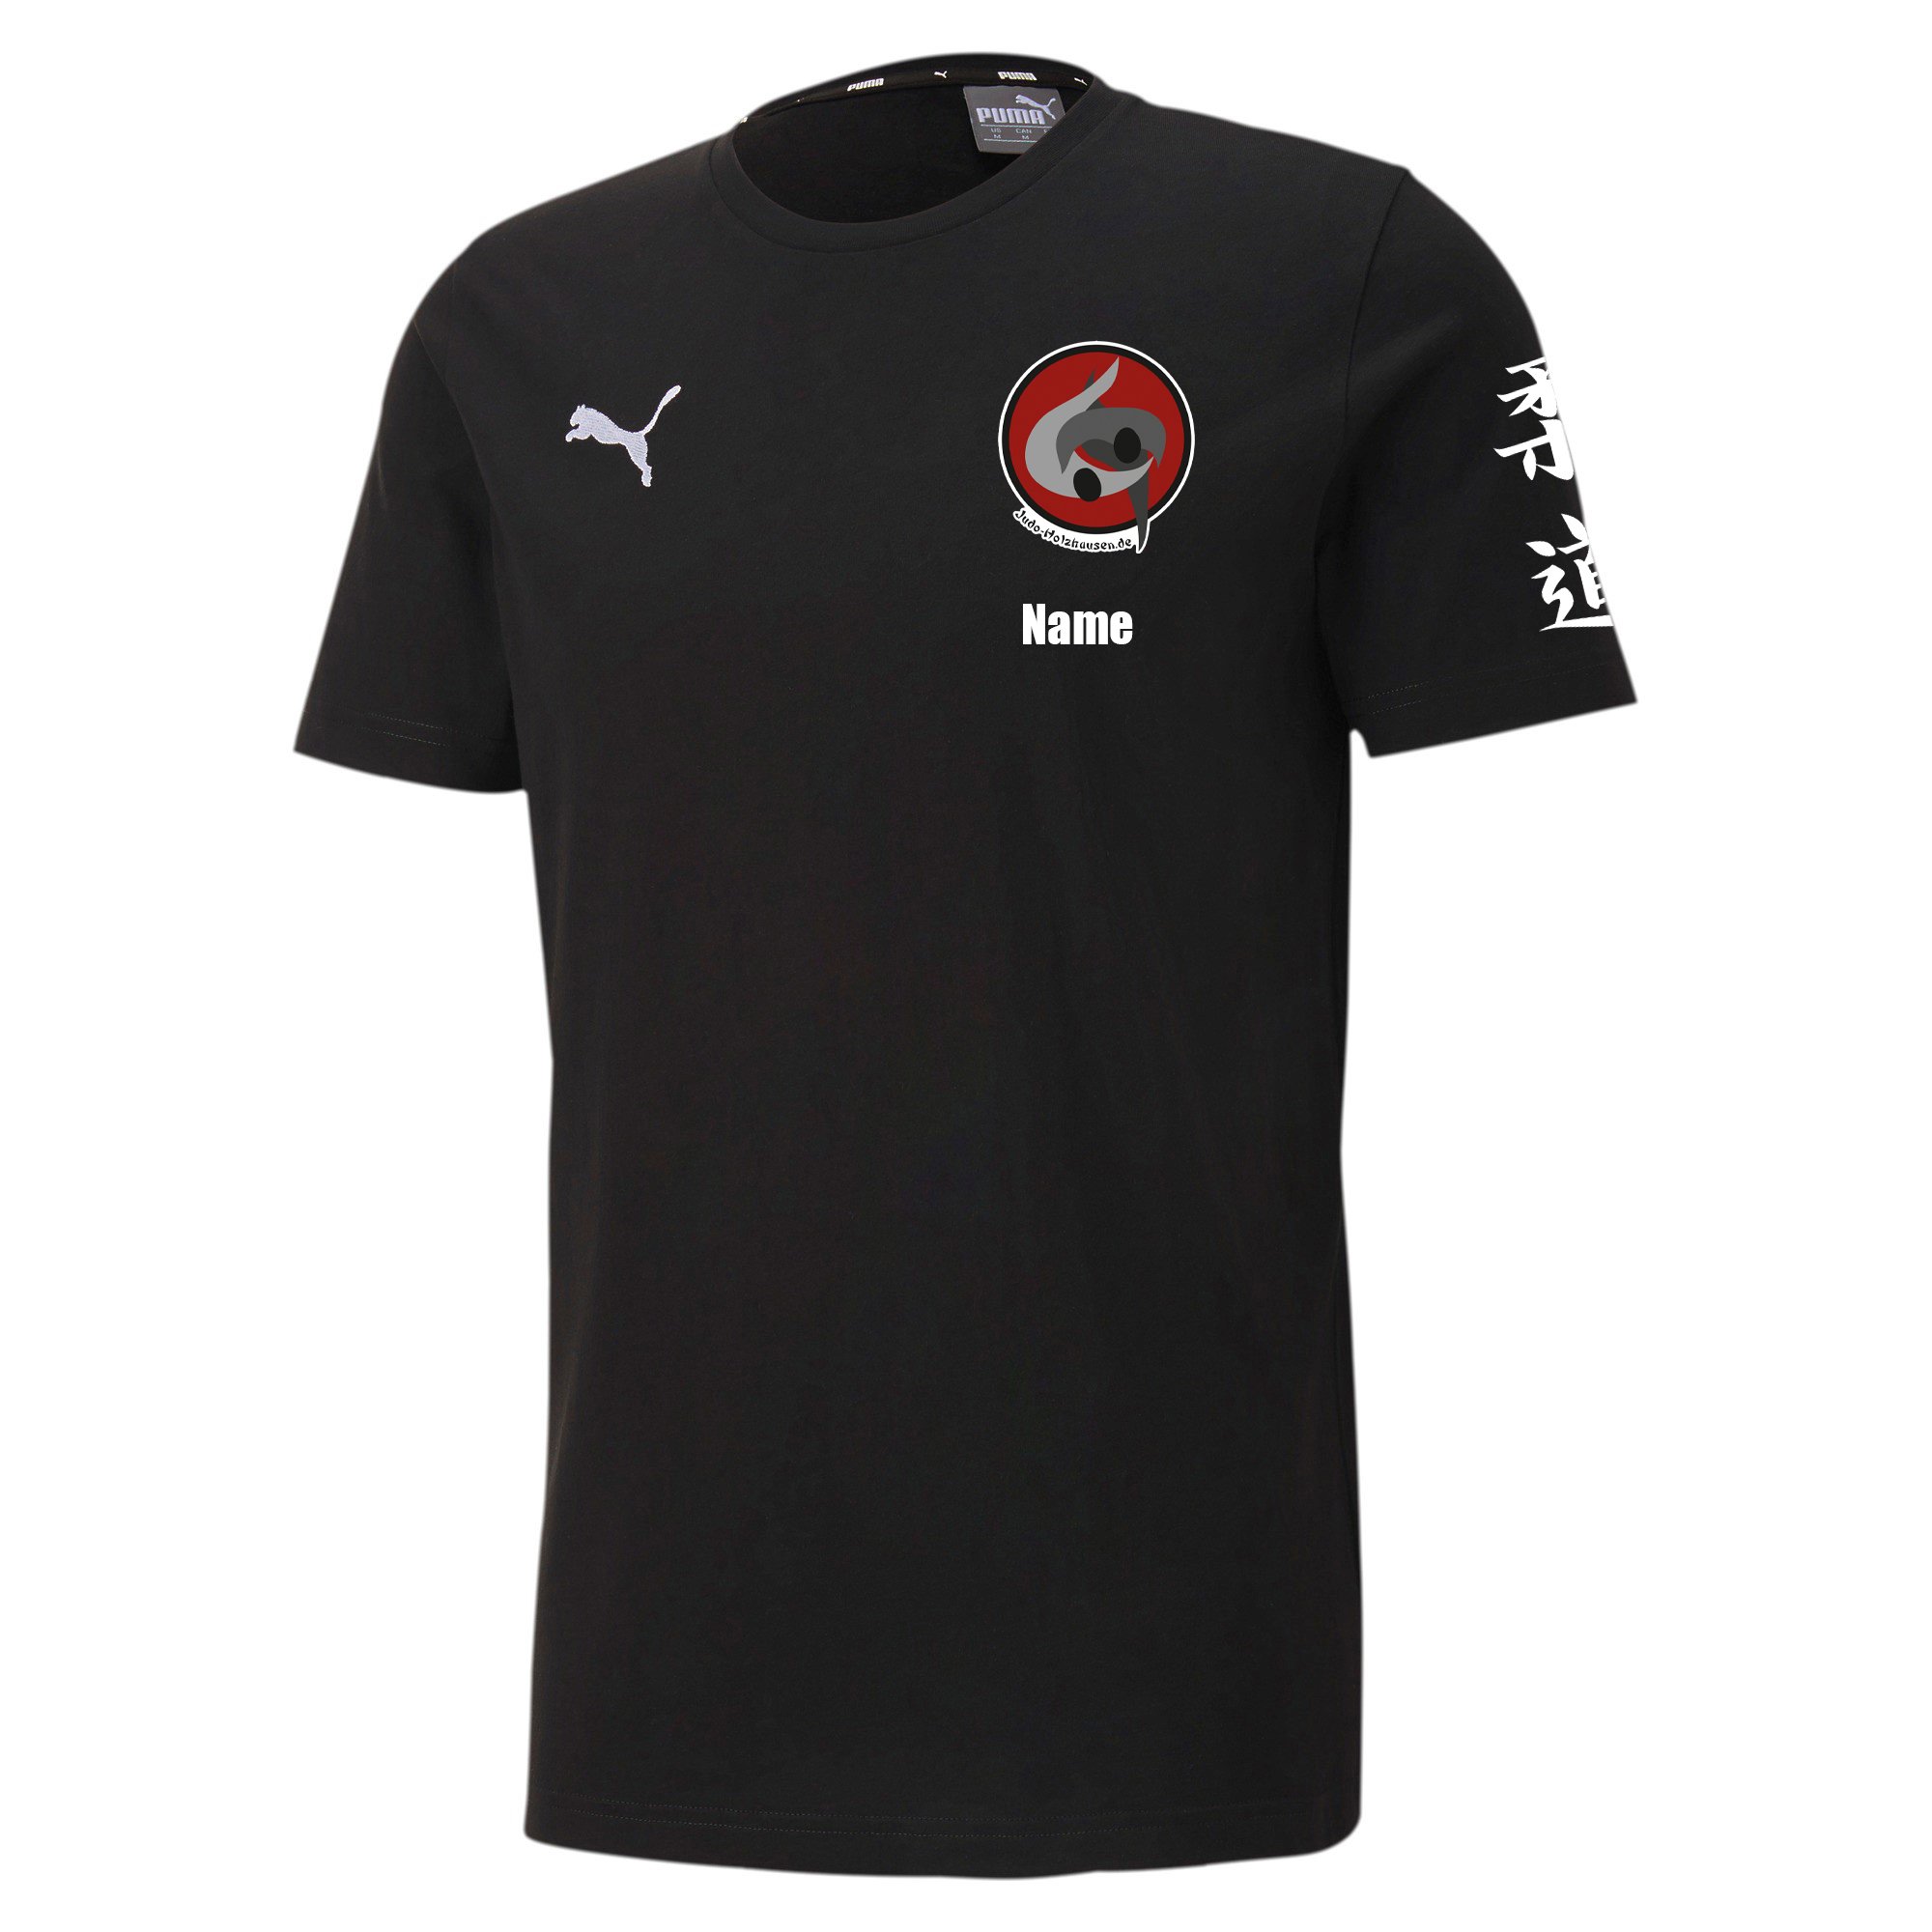 Judo Holzhausen T-Shirt